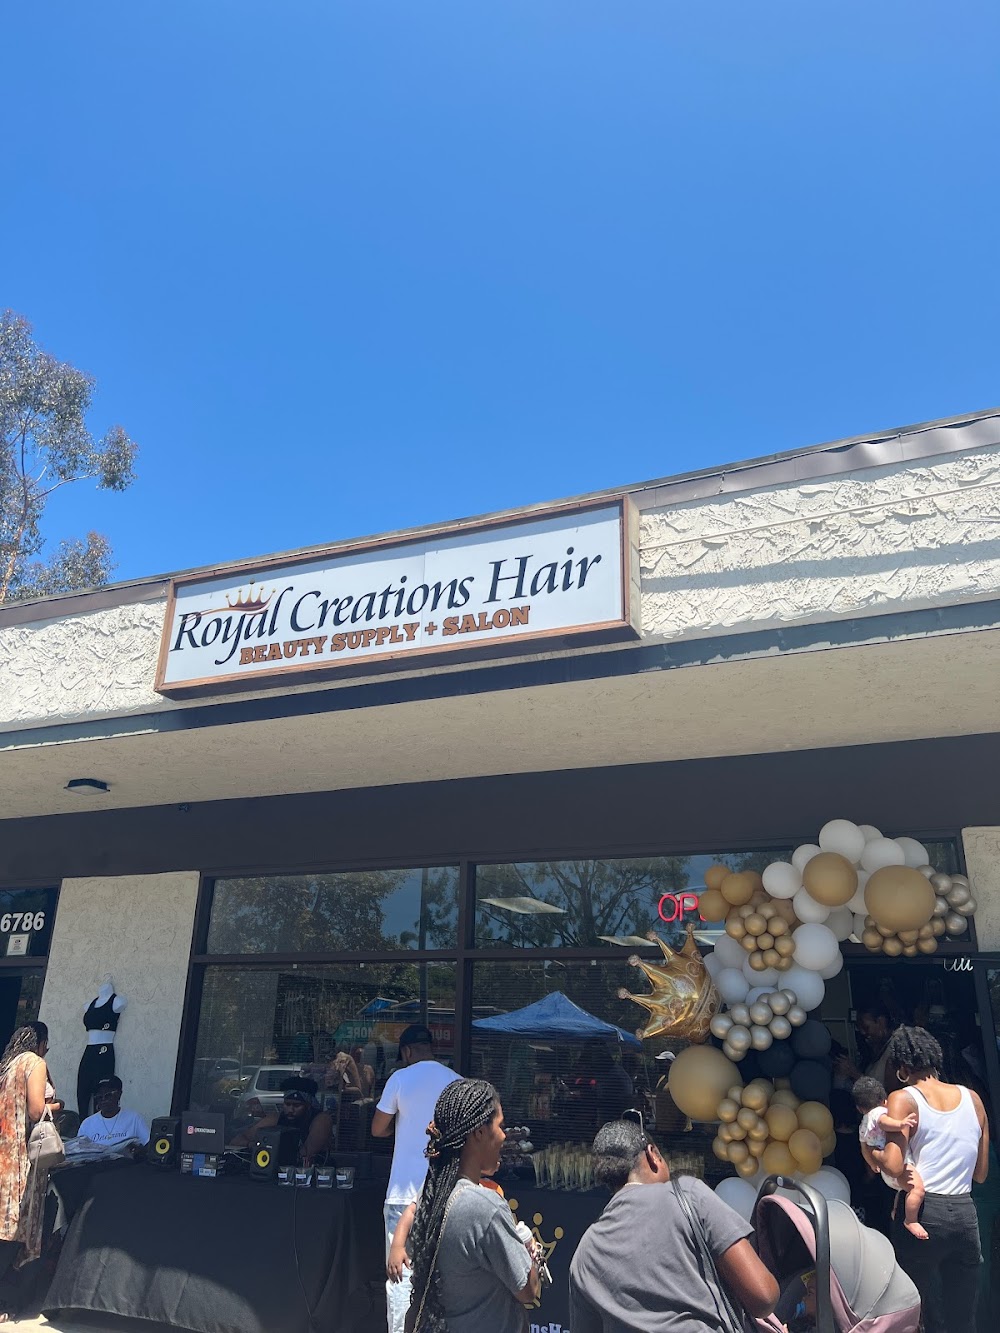 Royal Creations Hair Beauty Supply + Salon